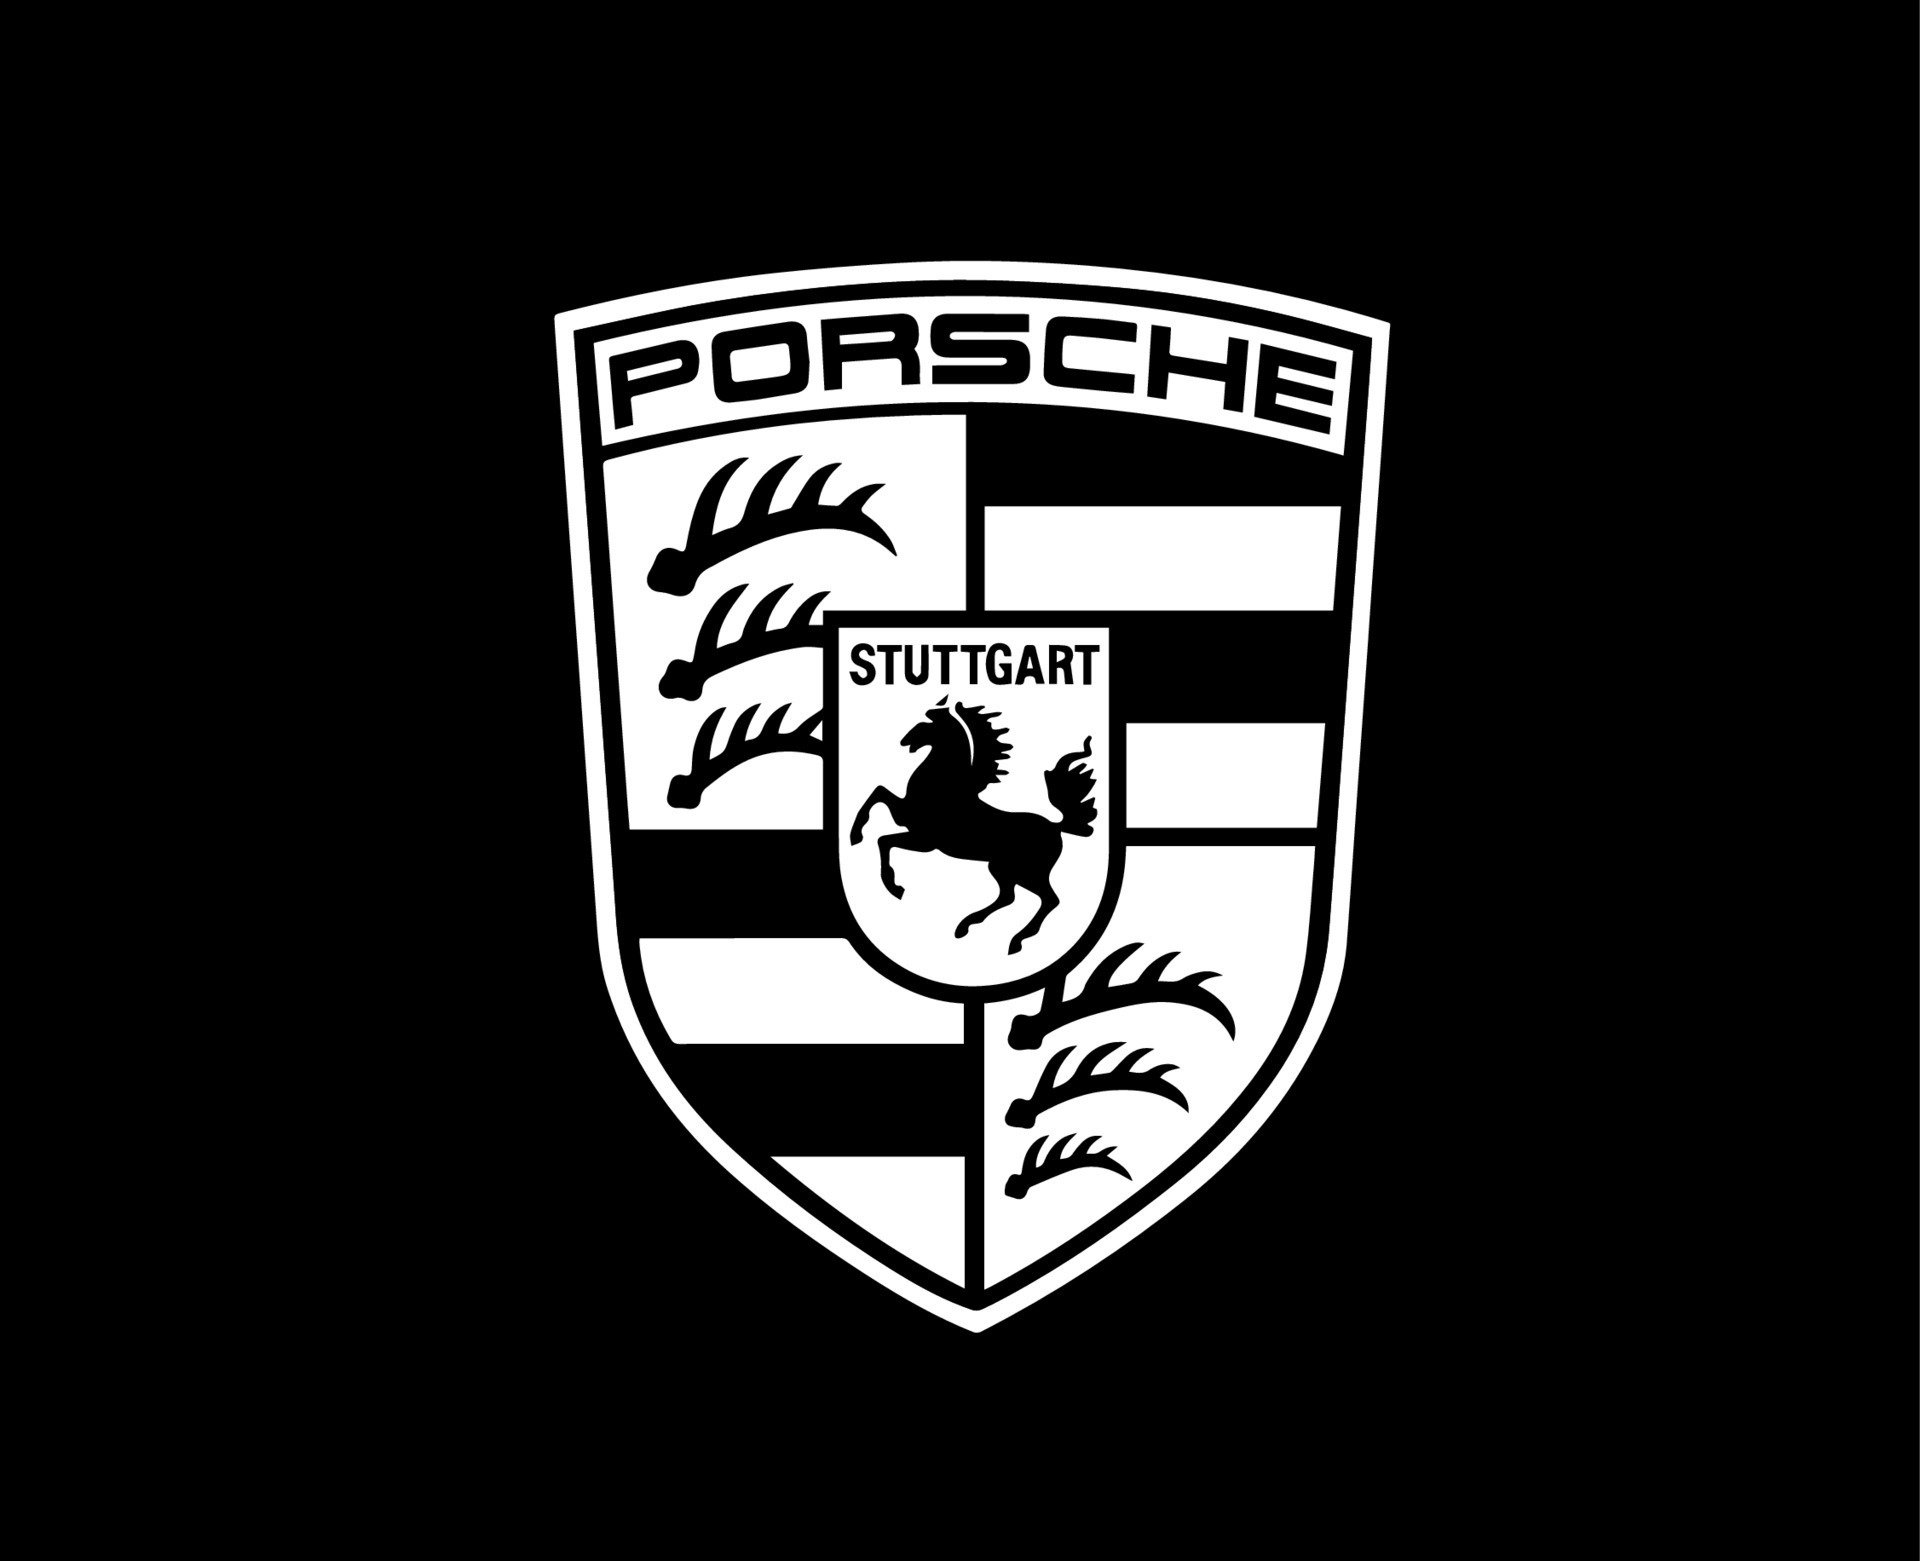 porsche-logo-brand-car-symbol-white-design-german-automobile-illustration-with-black-background-free-vector.jpg